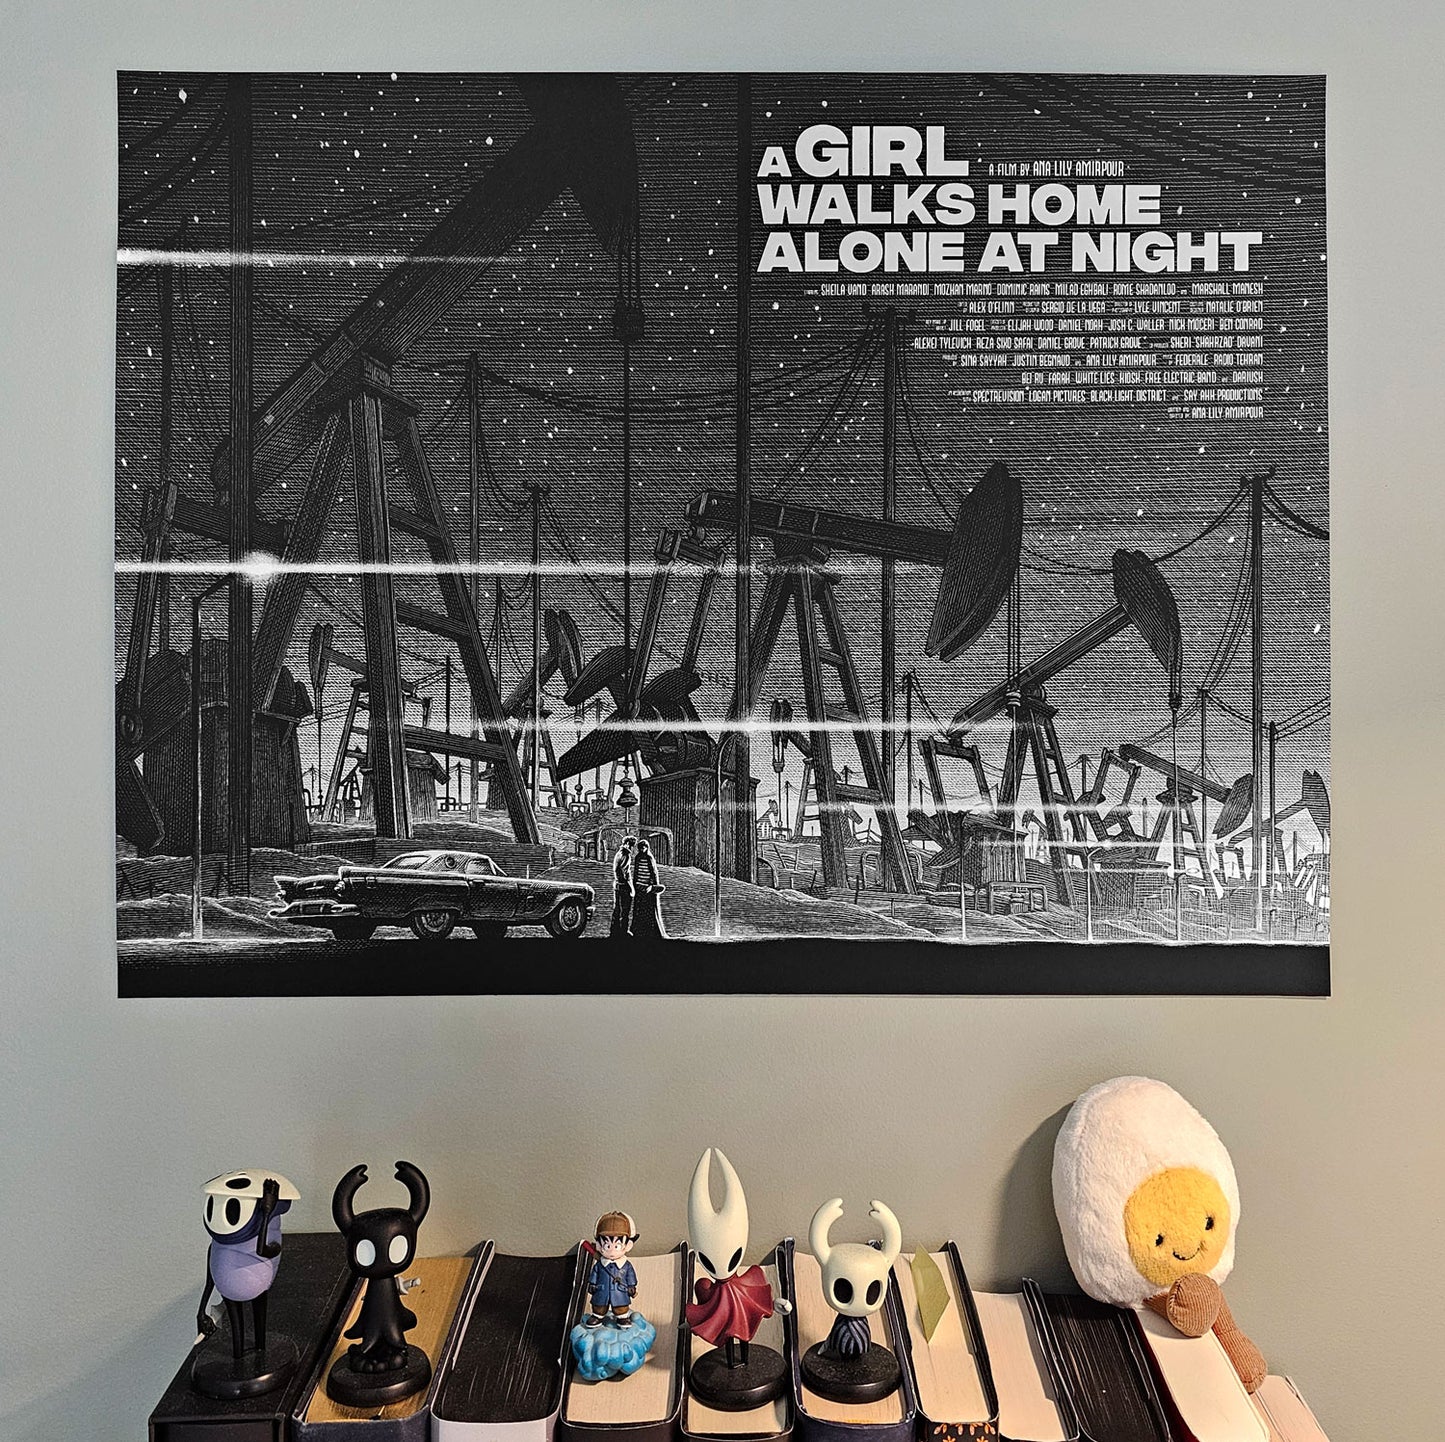 A girl walks home alone at night - AP